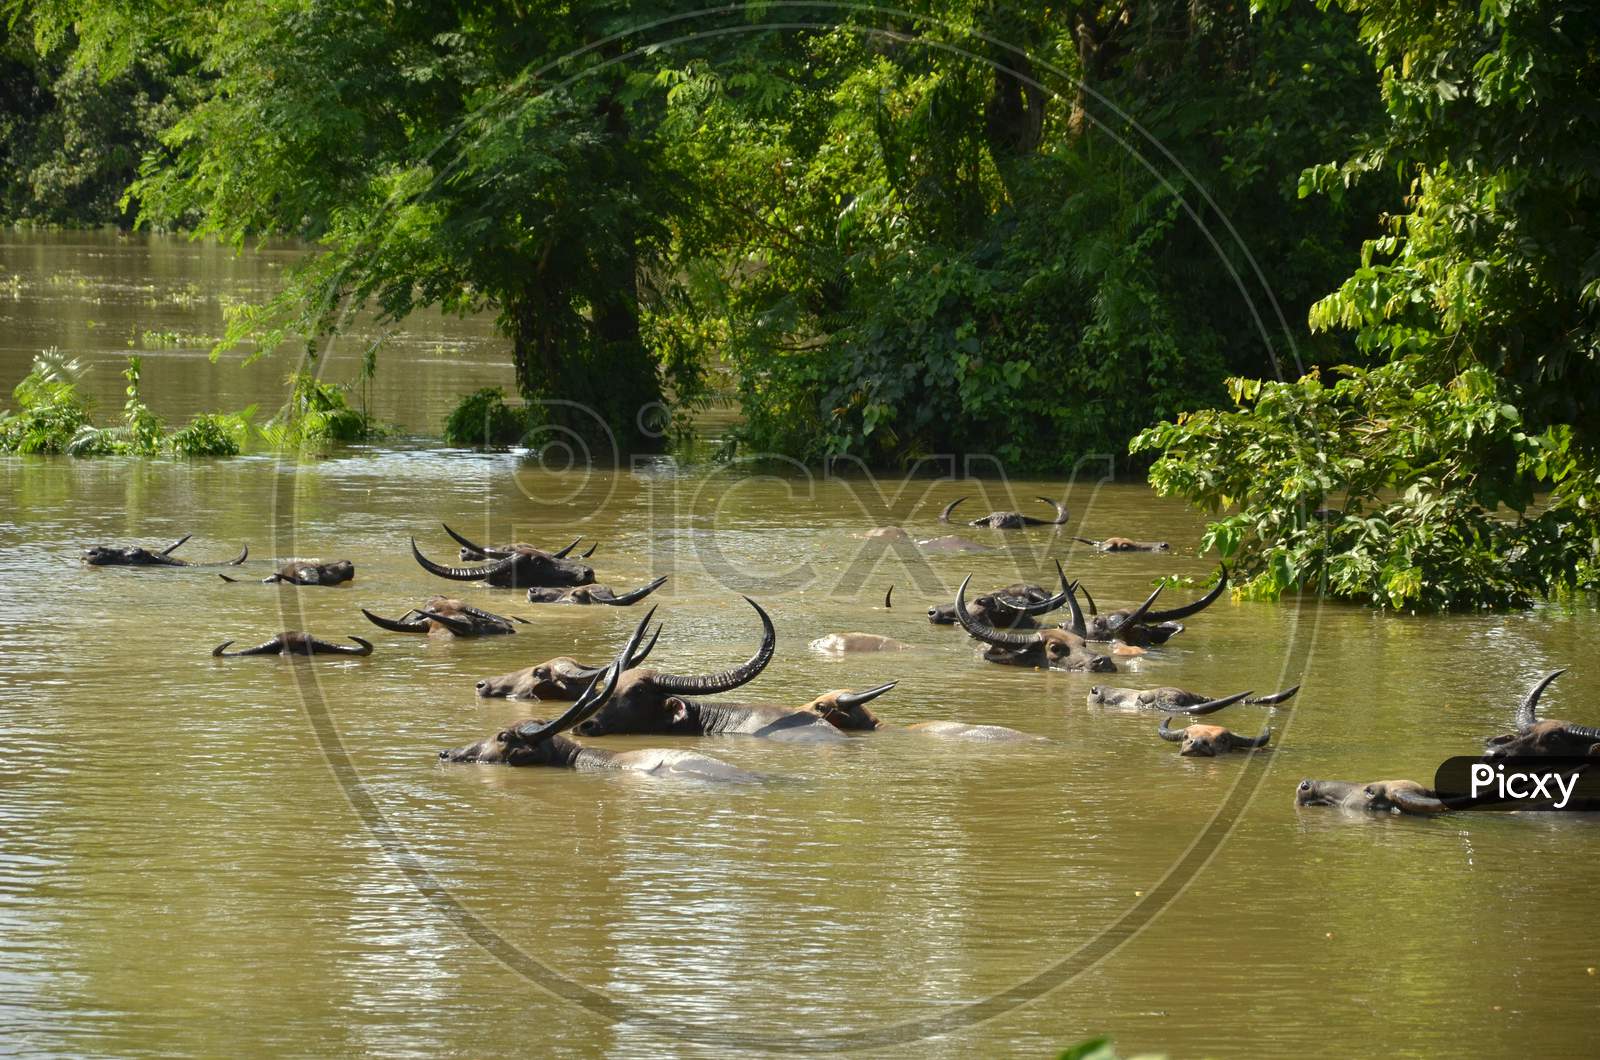 Wild Buffaloes Drowned in Flood Water In Kaziranga Region of Assam